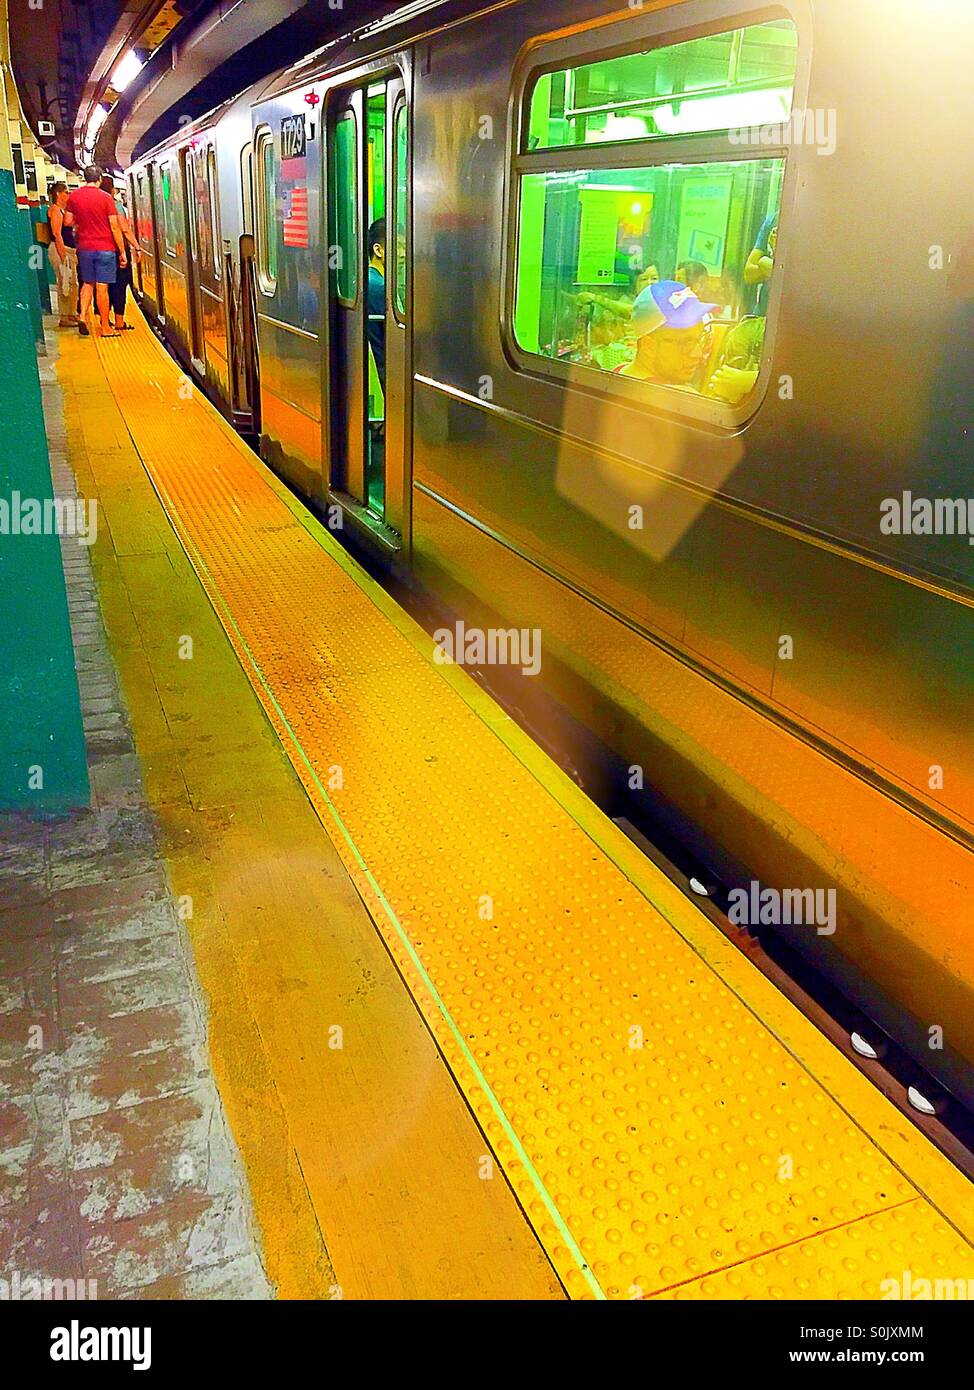 Subway train car stopped at Station New York City. Stock Photo